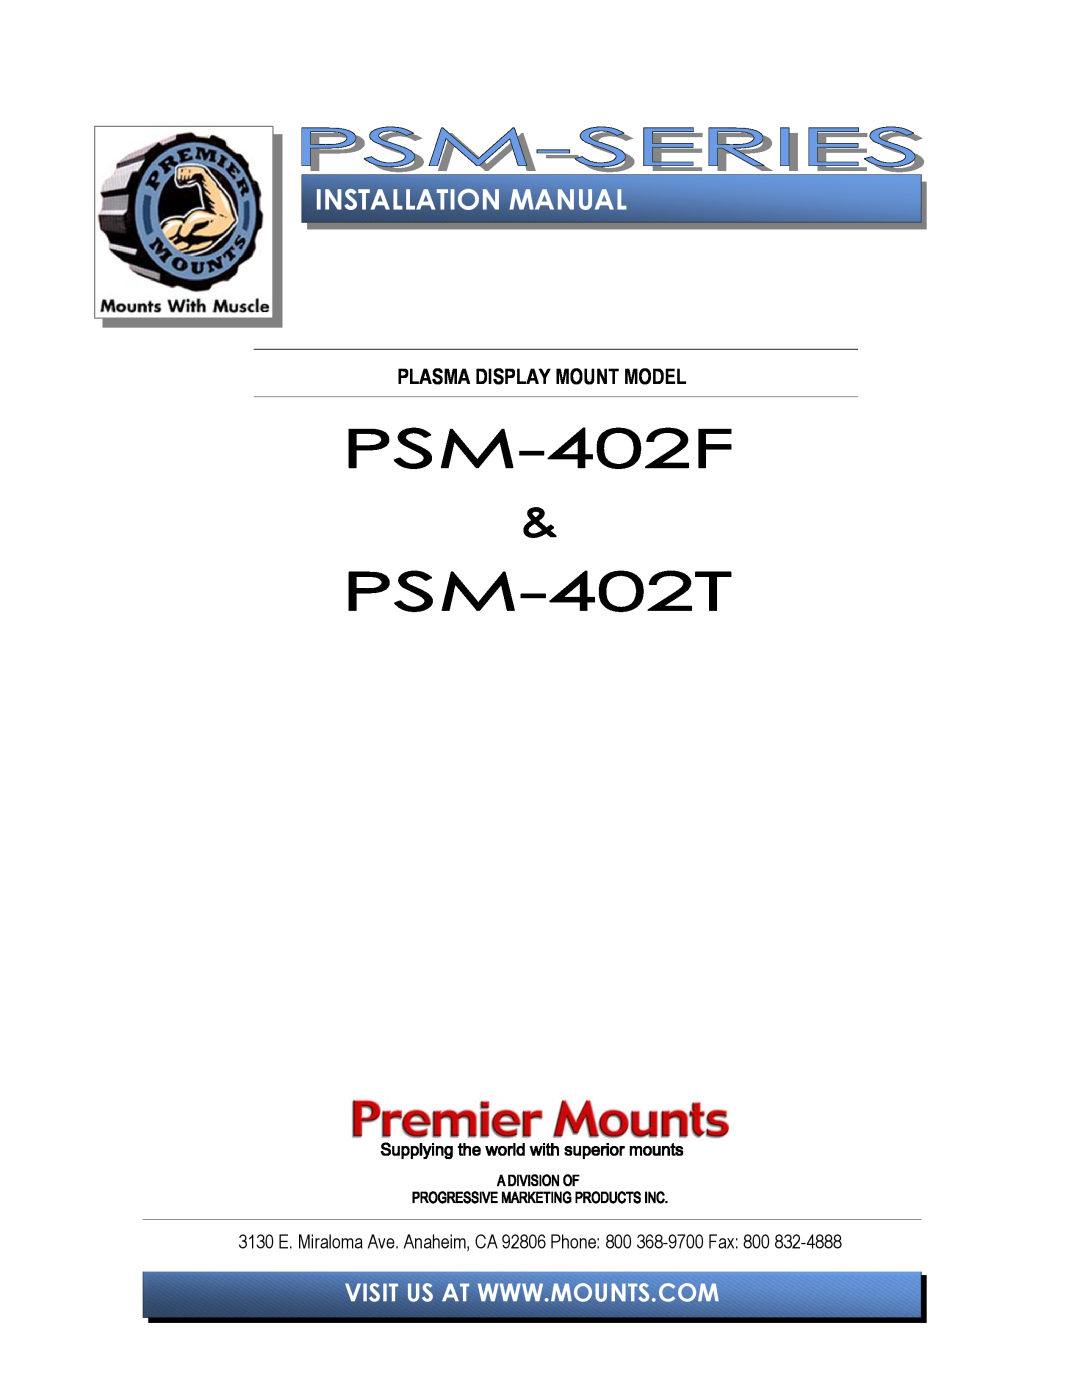 Premier Mounts PSM-402F, PSM-402T installation manual Plasma Display Mount Model, Installation Manual 